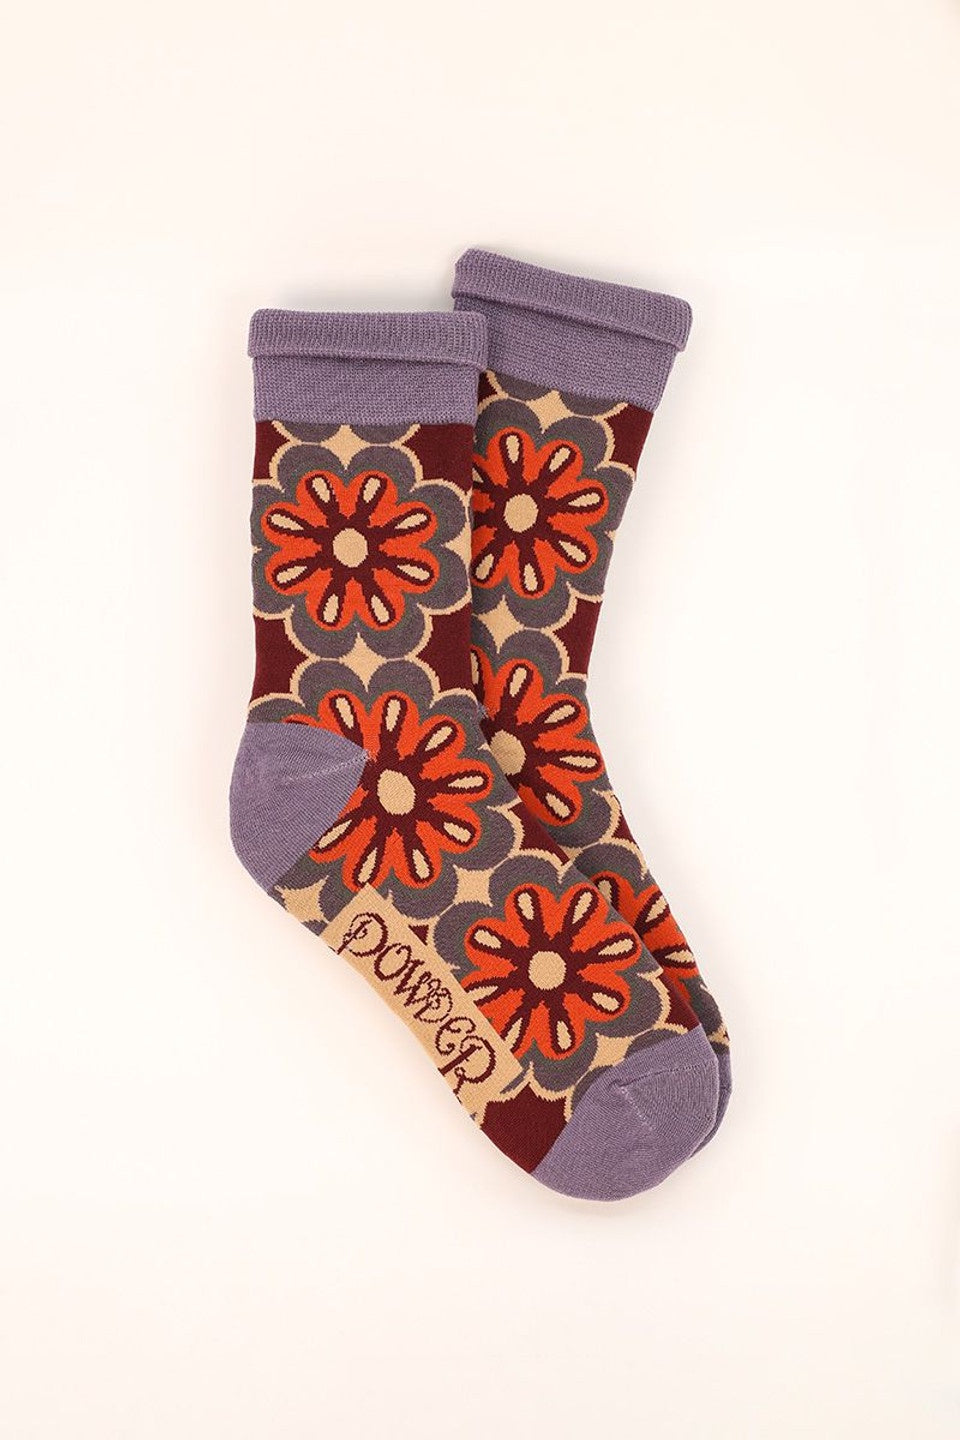 Floral Mosaic Socks - Large